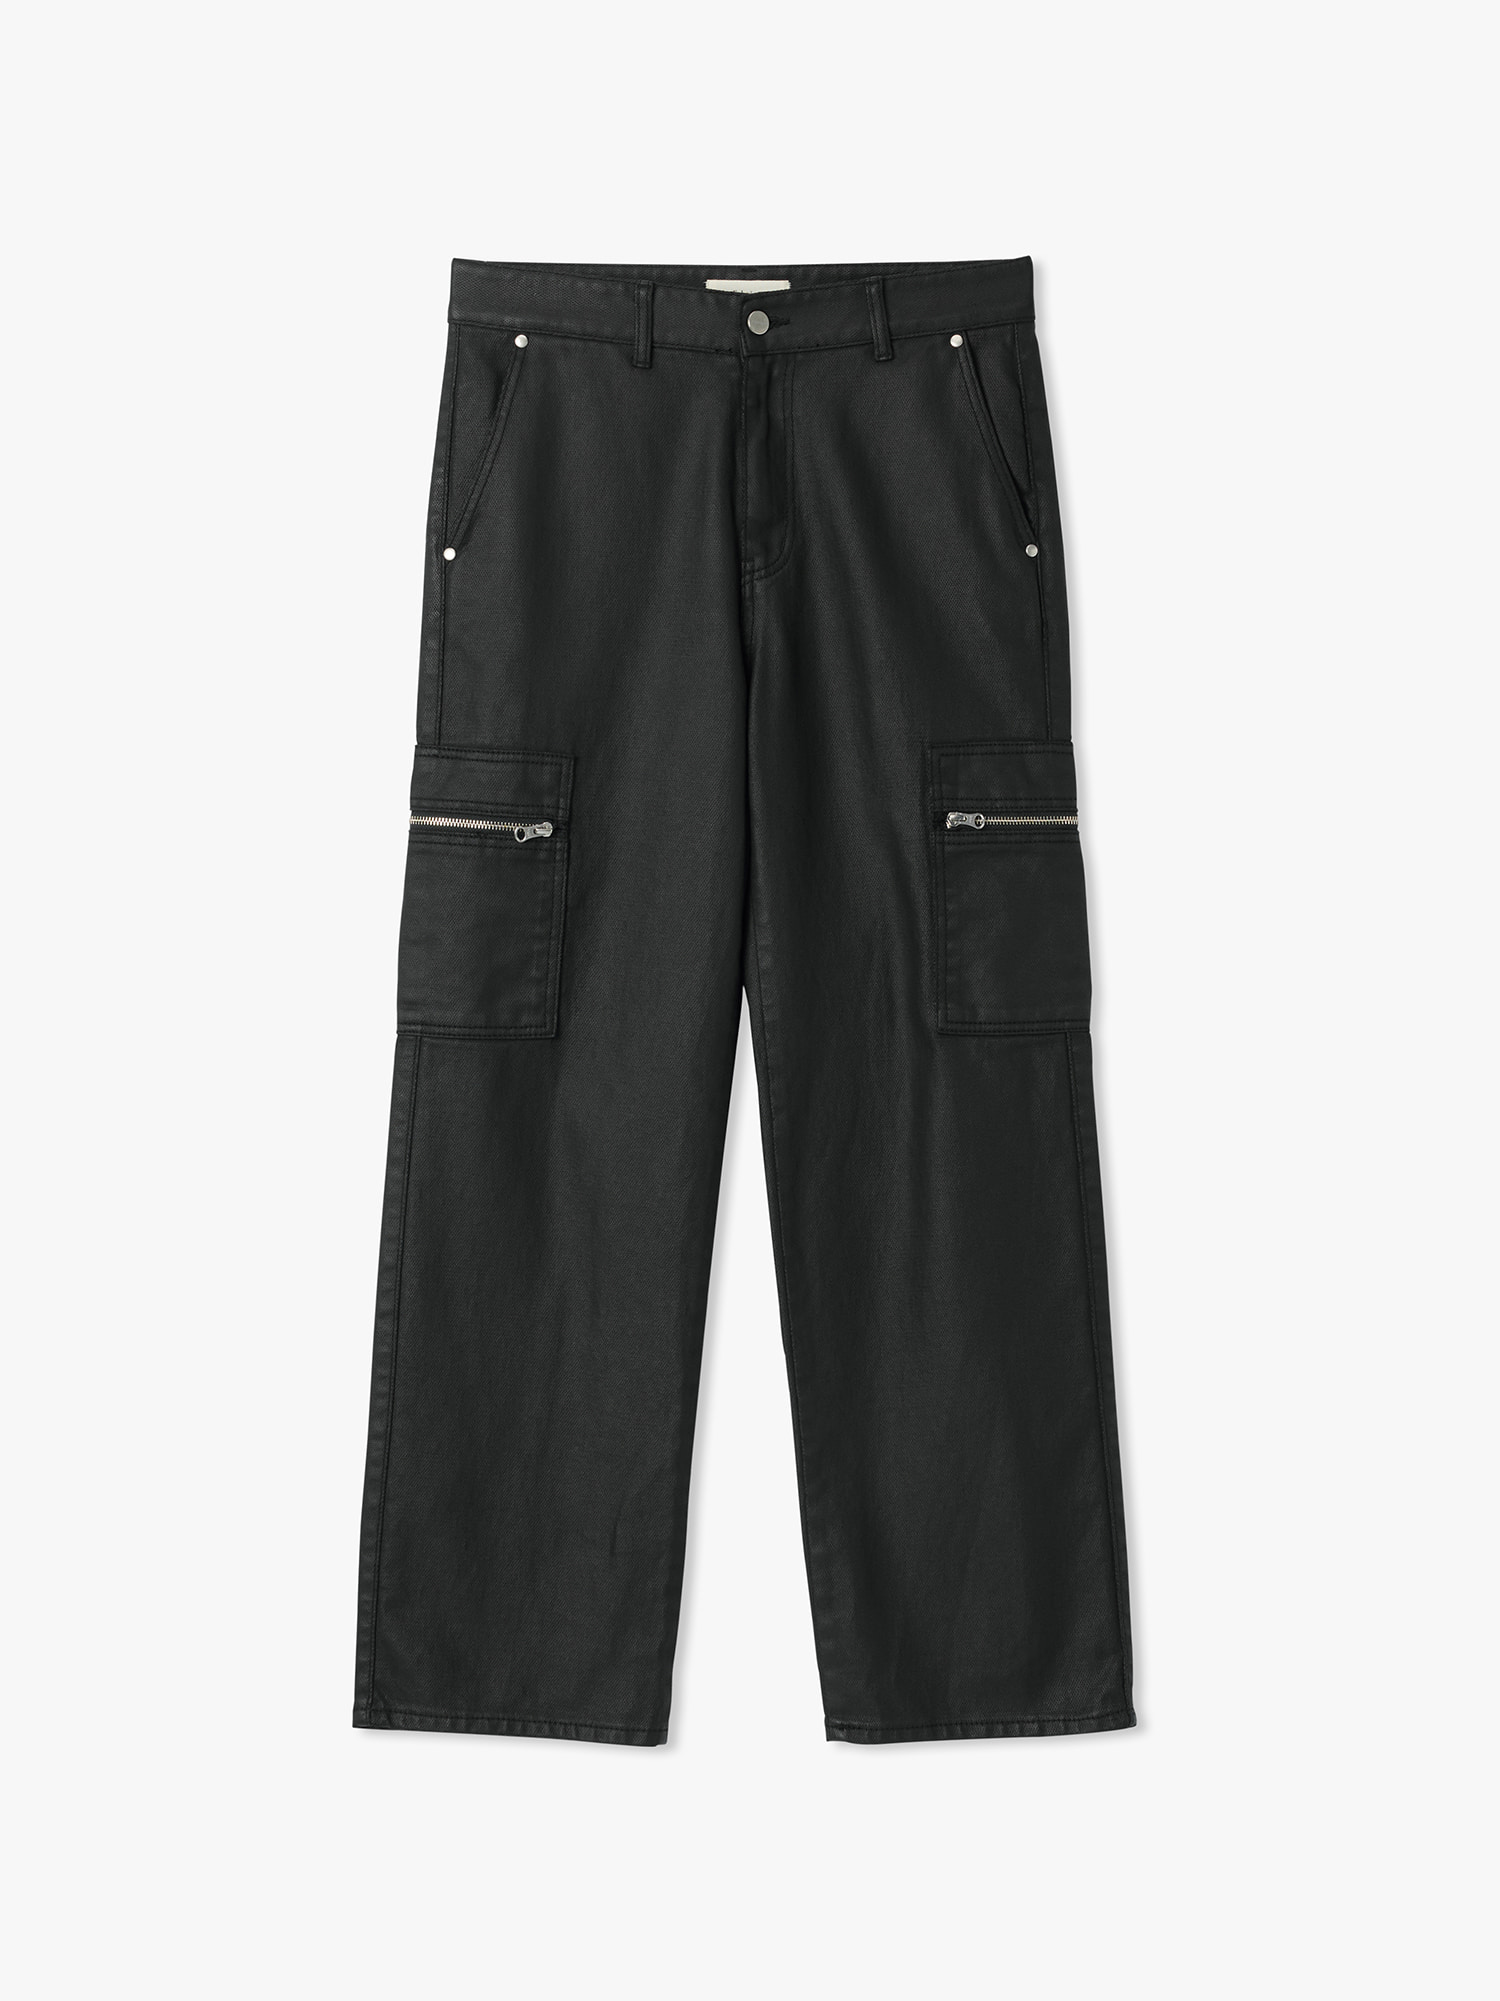 Carbon Zipper Semi Wide Cargo Pants (Black)